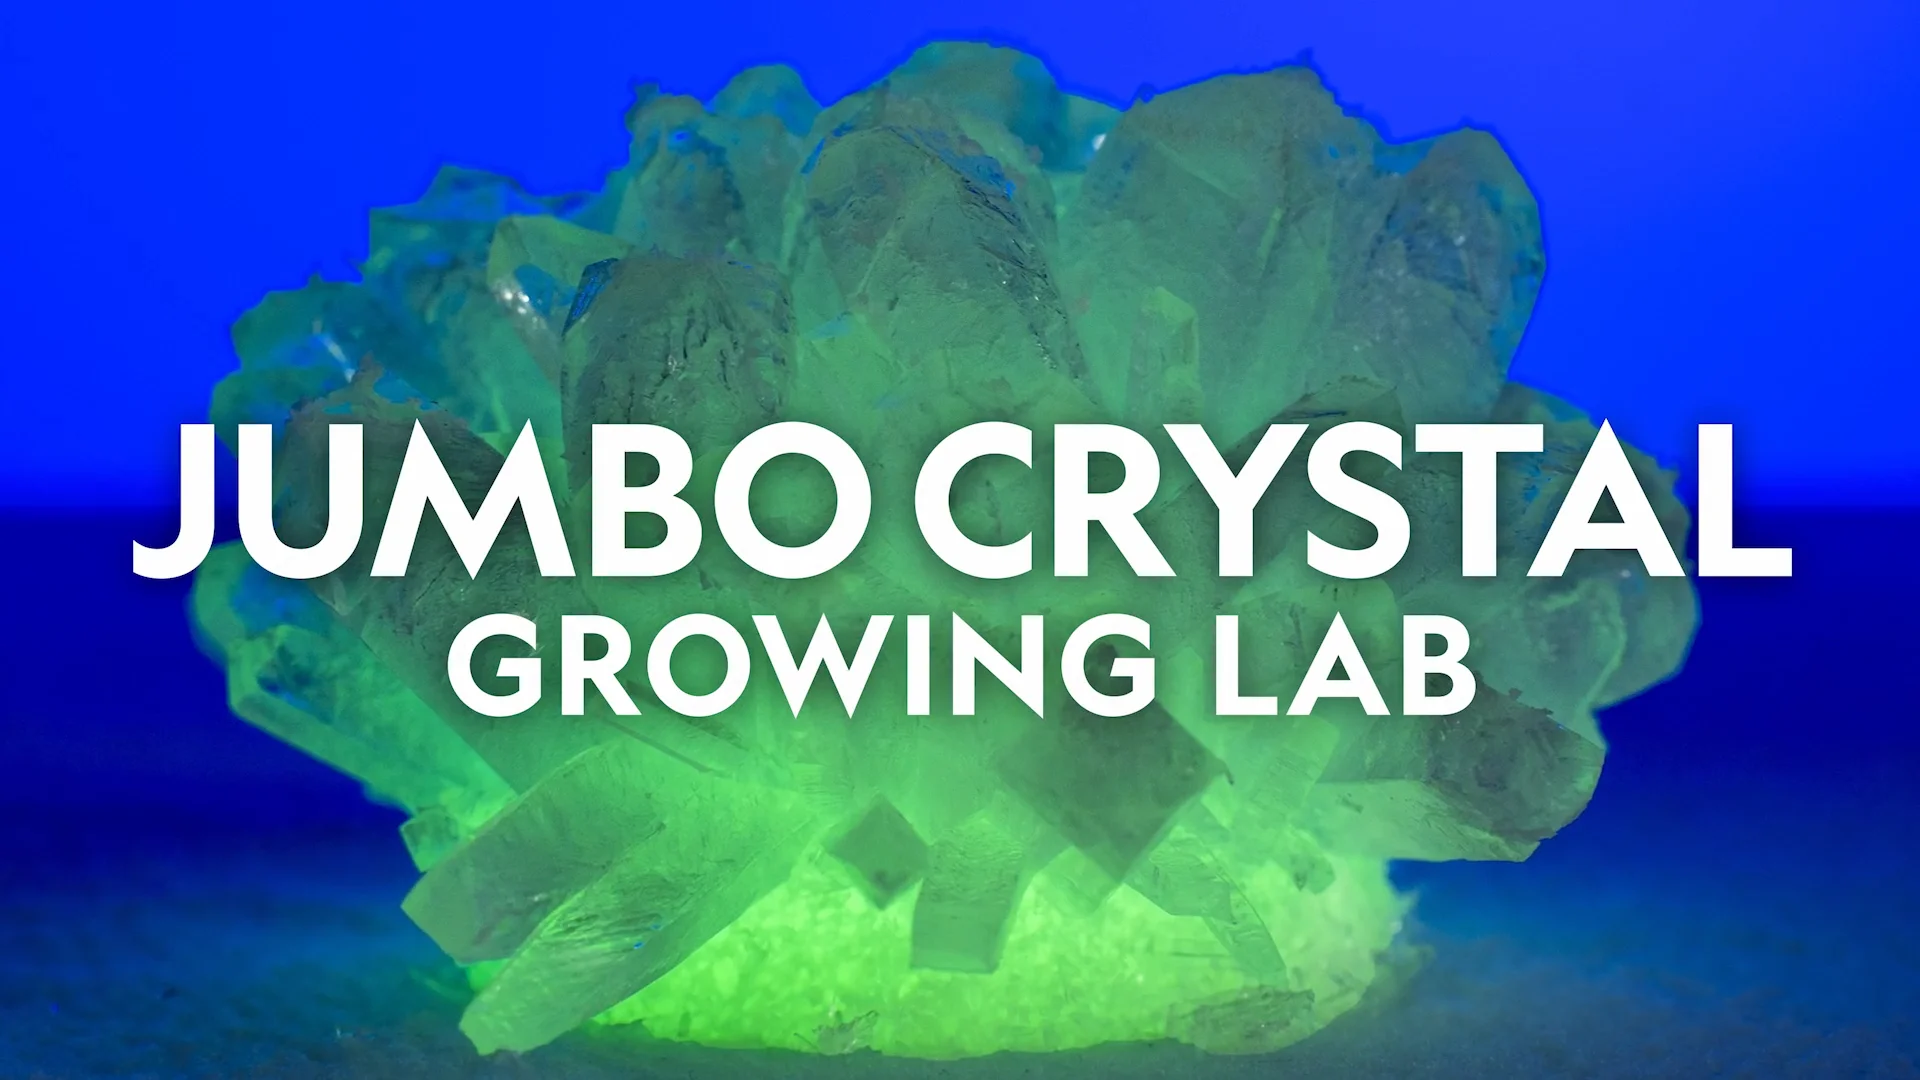 Jumbo Crystal Growing Lab - National Geographic